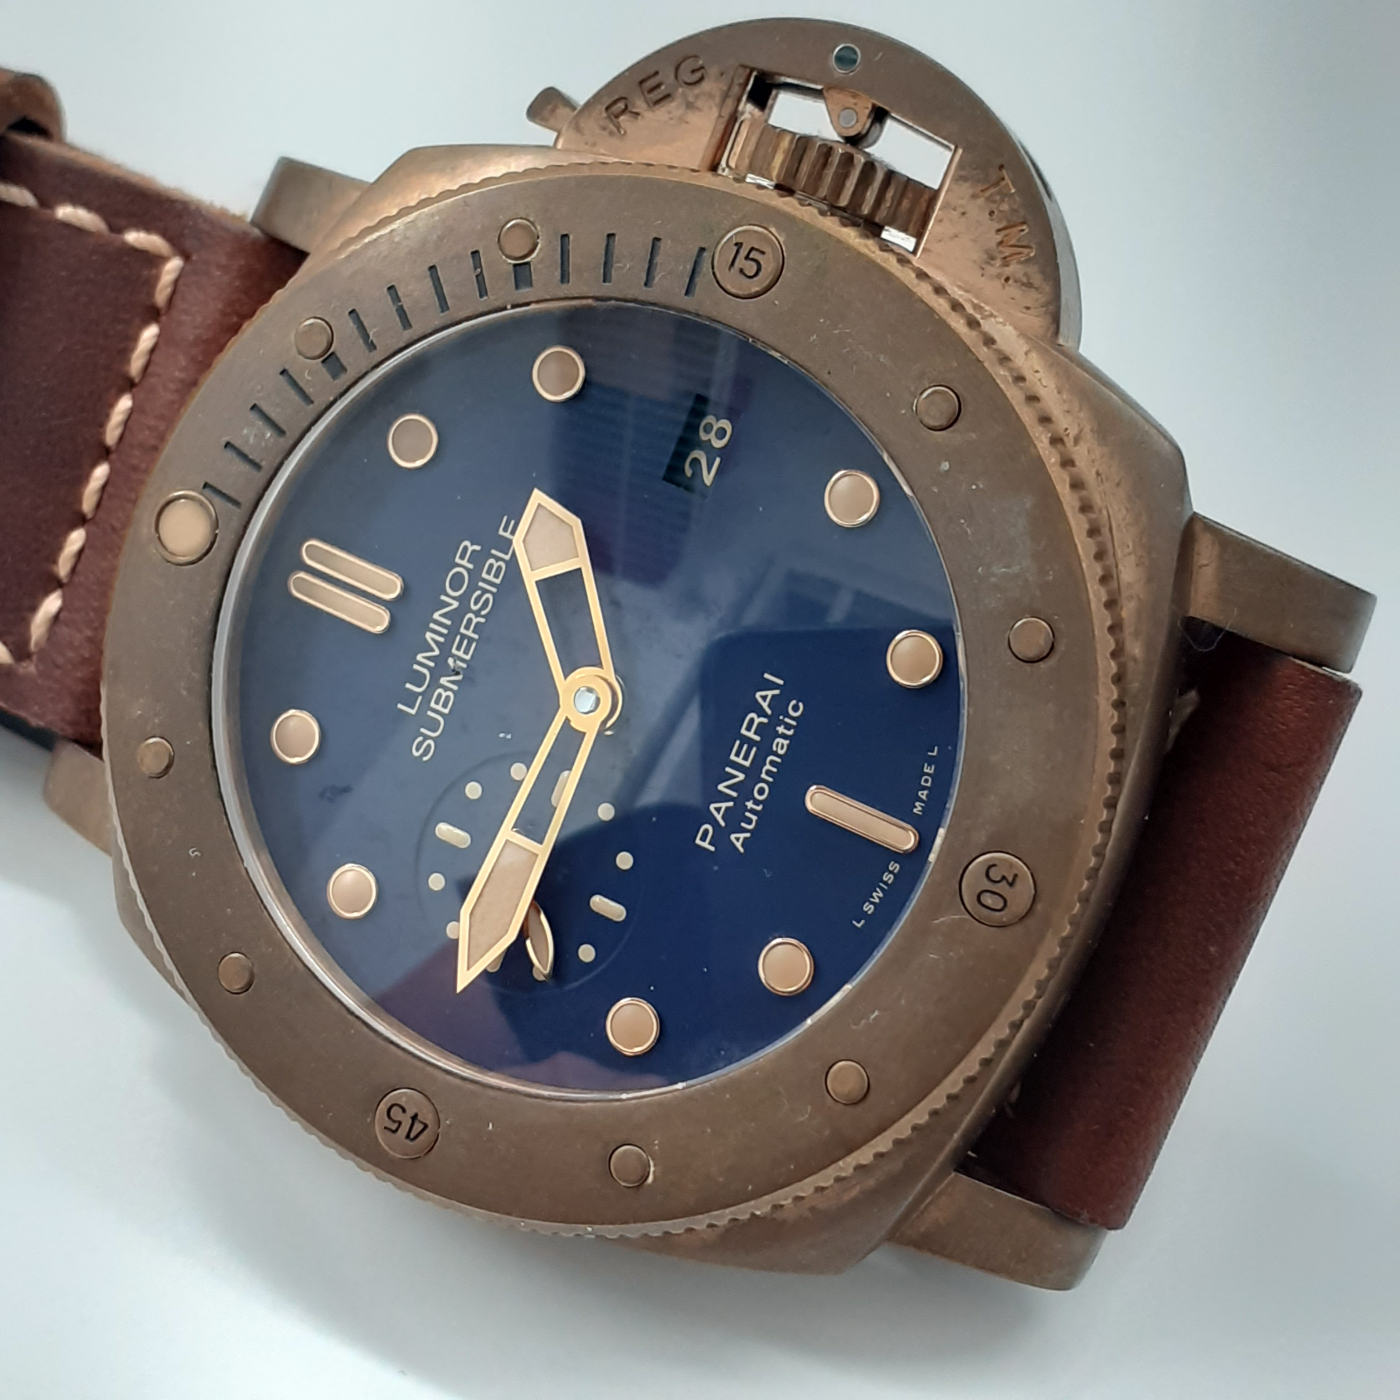 Luminor Marina - Swiss Watch | Malaysia's Premier Luxury Watch Retailer